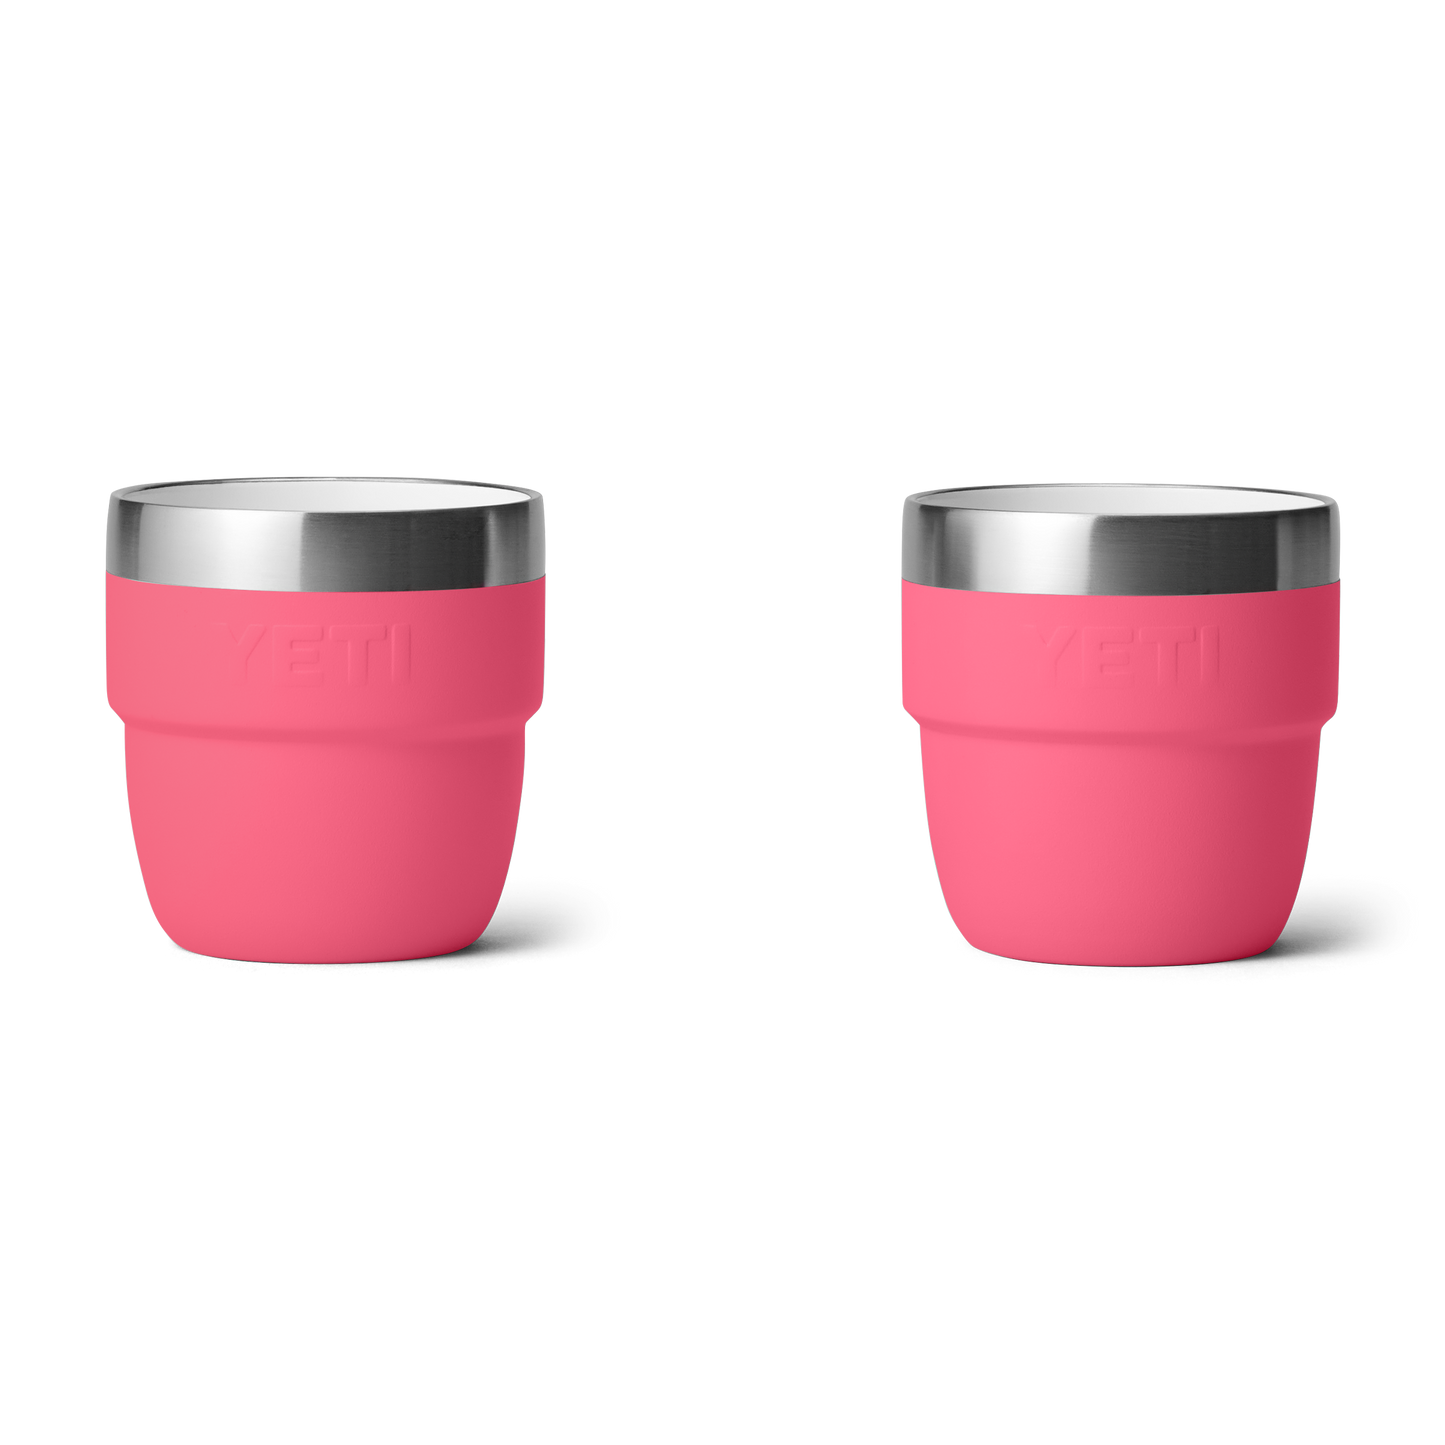 YETI Rambler® 4 oz (118 ml) Stackable Cups Tropical Pink